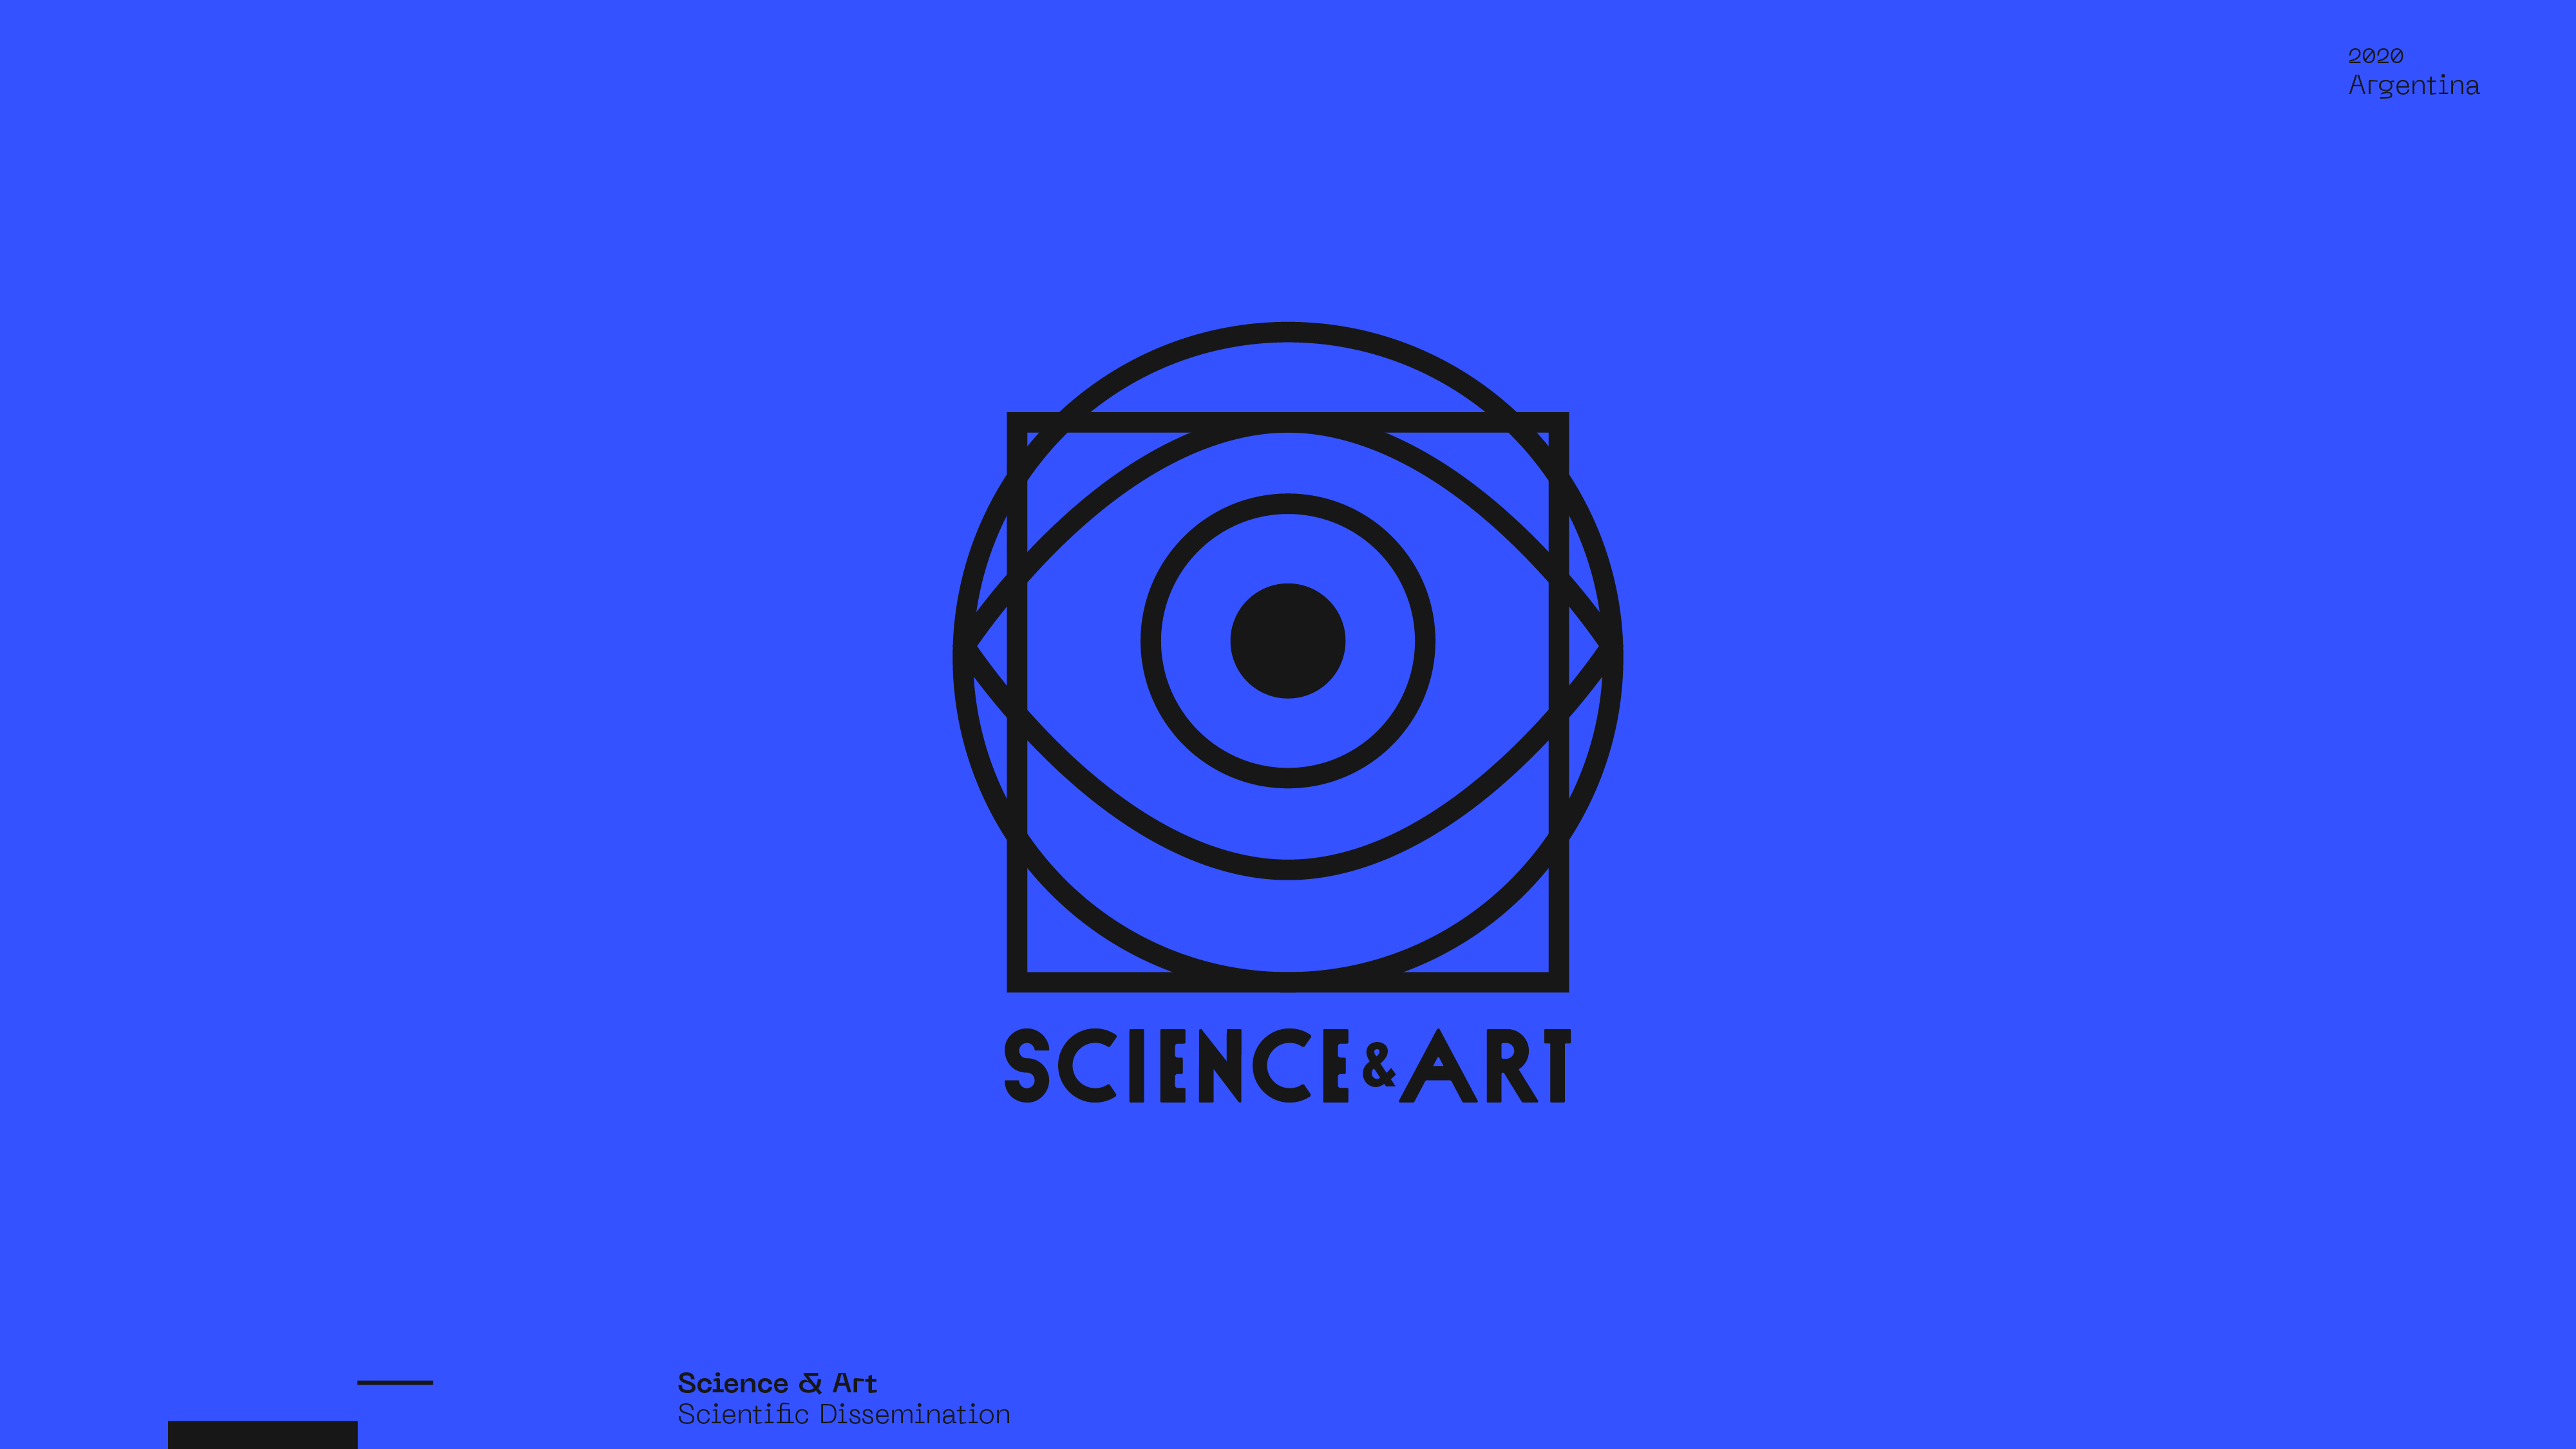 Guapo Design Studio by Esteban Ibarra Logofolio 2020 logo design — Science & Art